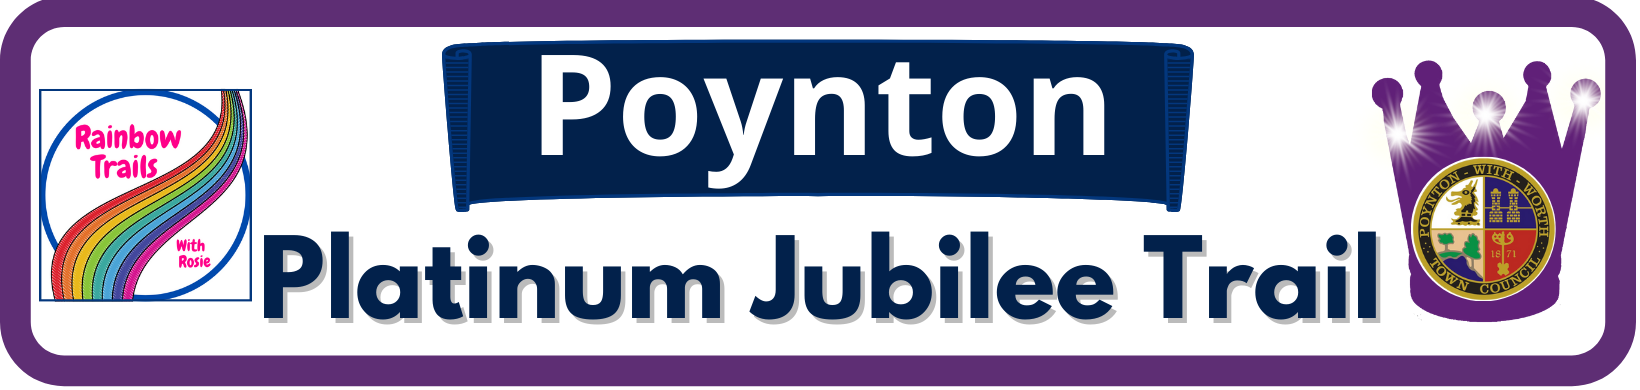 Poynton Platinum Jubilee Trail, 30th April - 12th June 2022, FREE